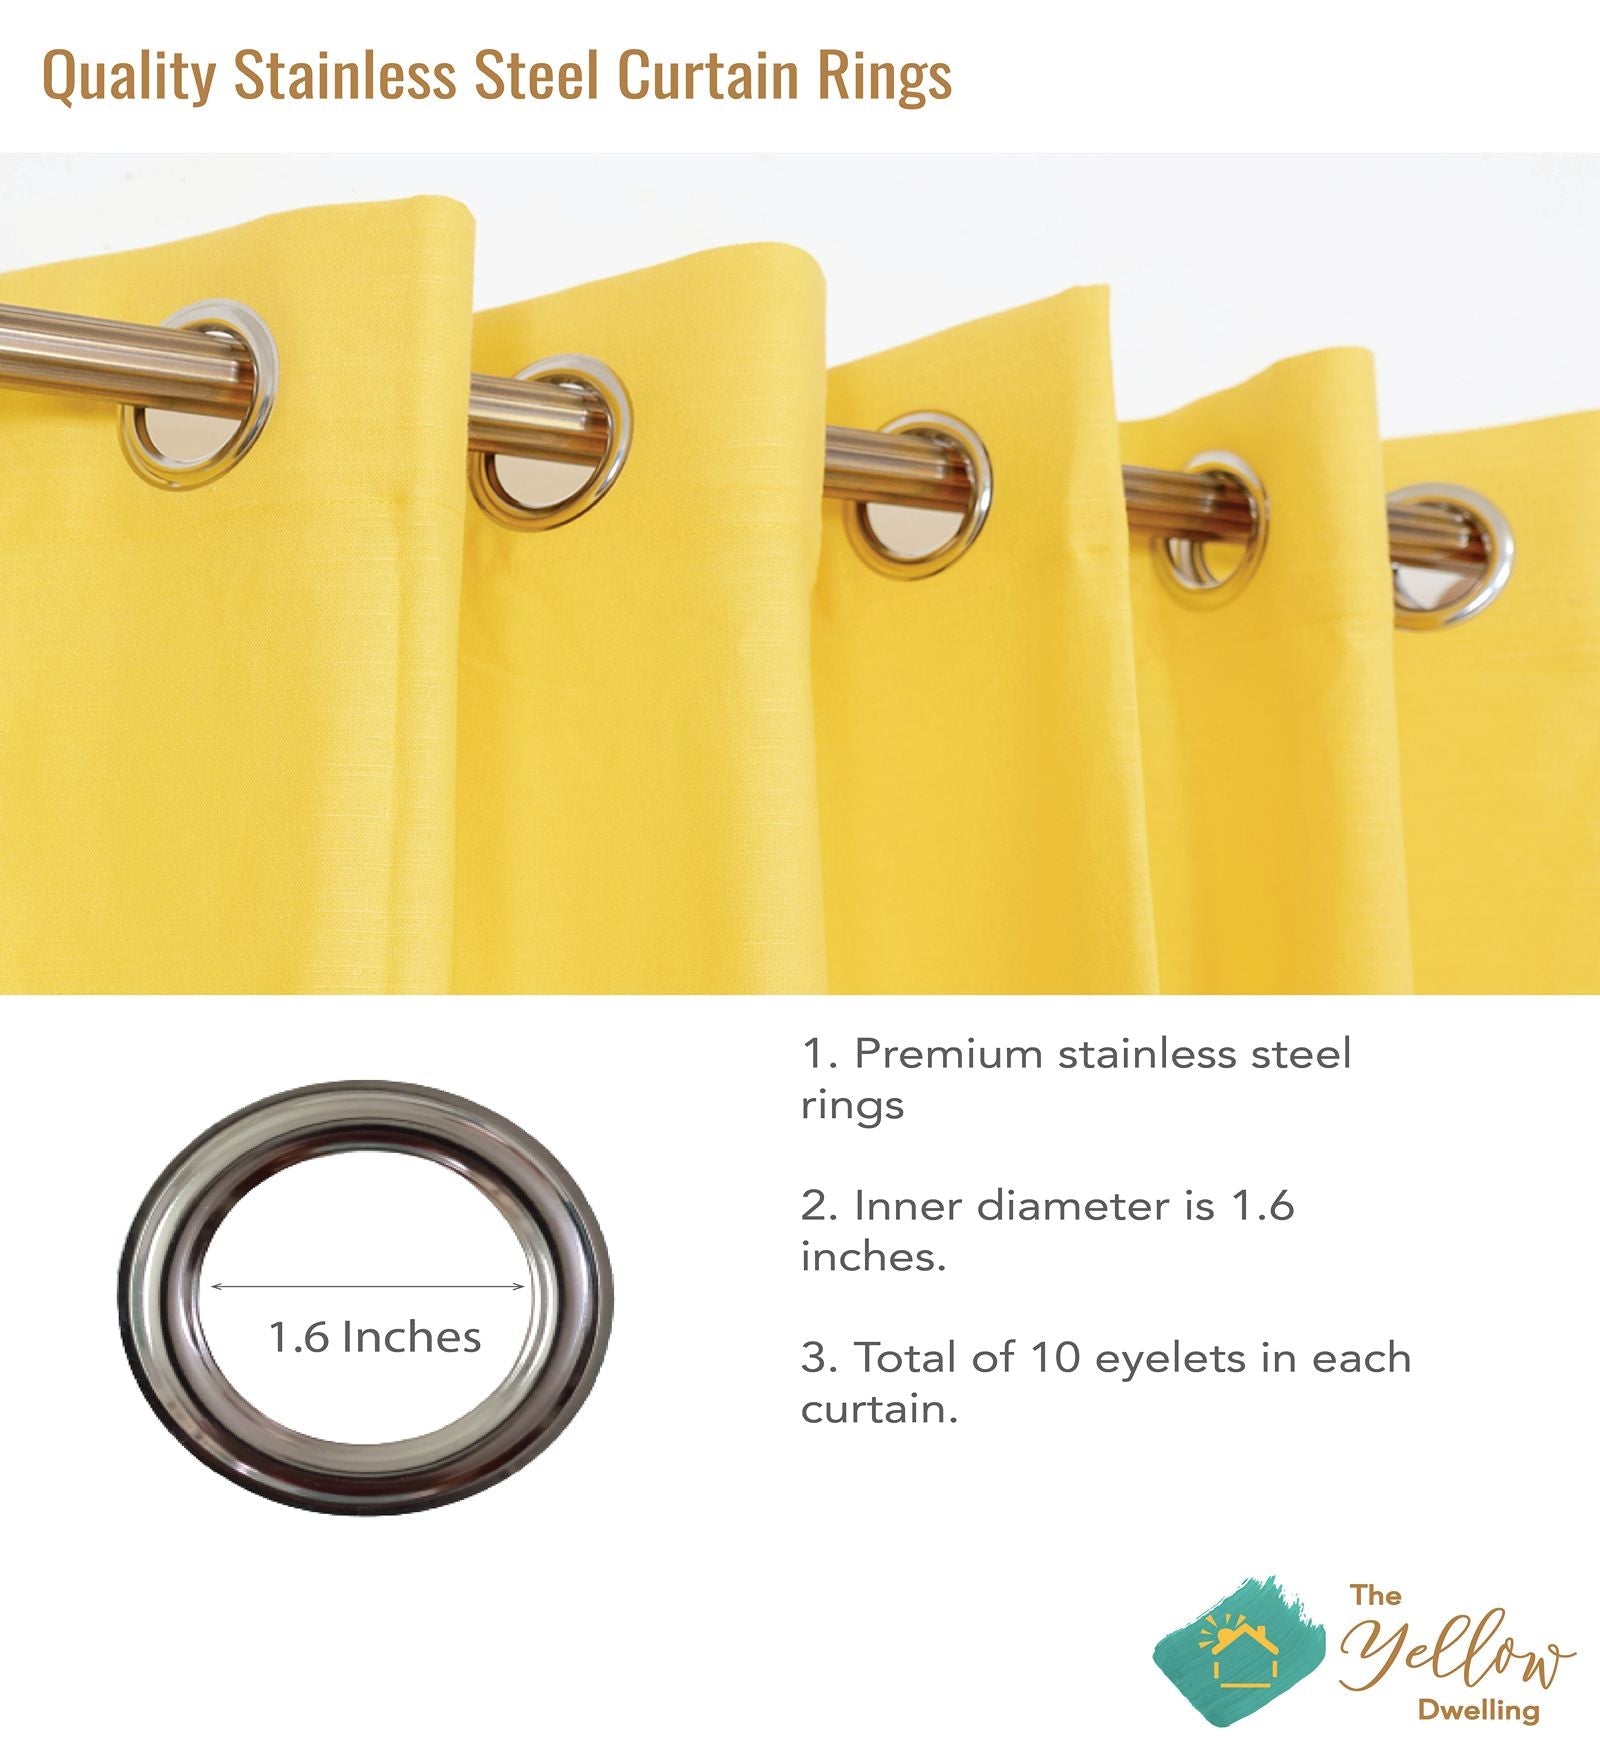 Solid Cotton Curtain - Plum